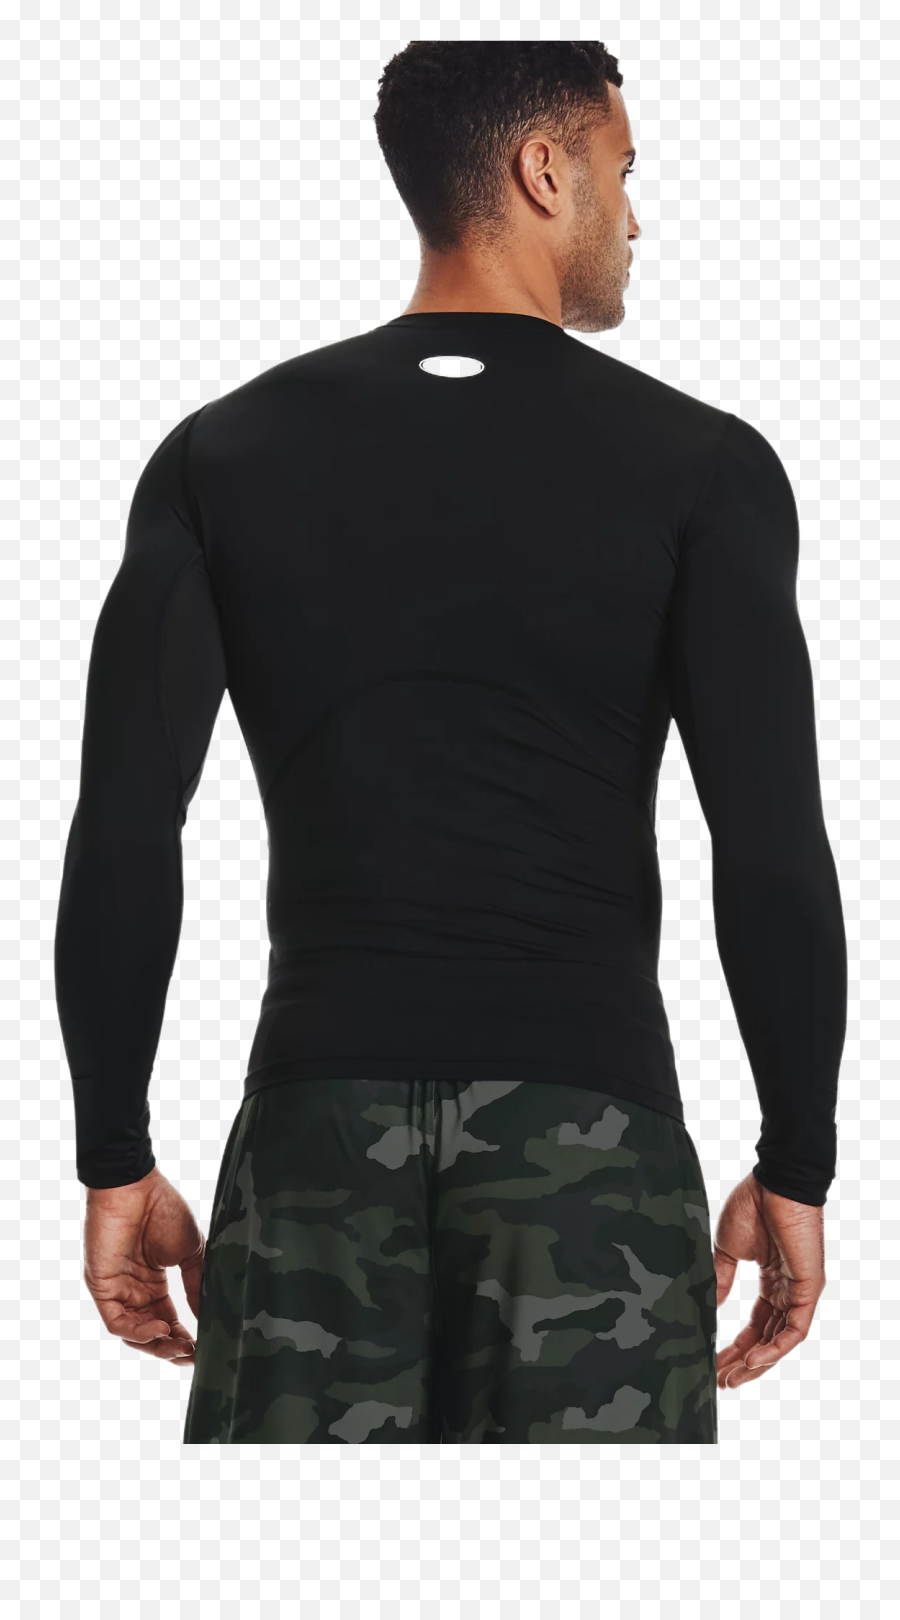 Under Armour Menu0027s Black Heatgear Long - Sleeve Compression Shirt Emoji,Black Man In Suit Golfing Emoji Graphic